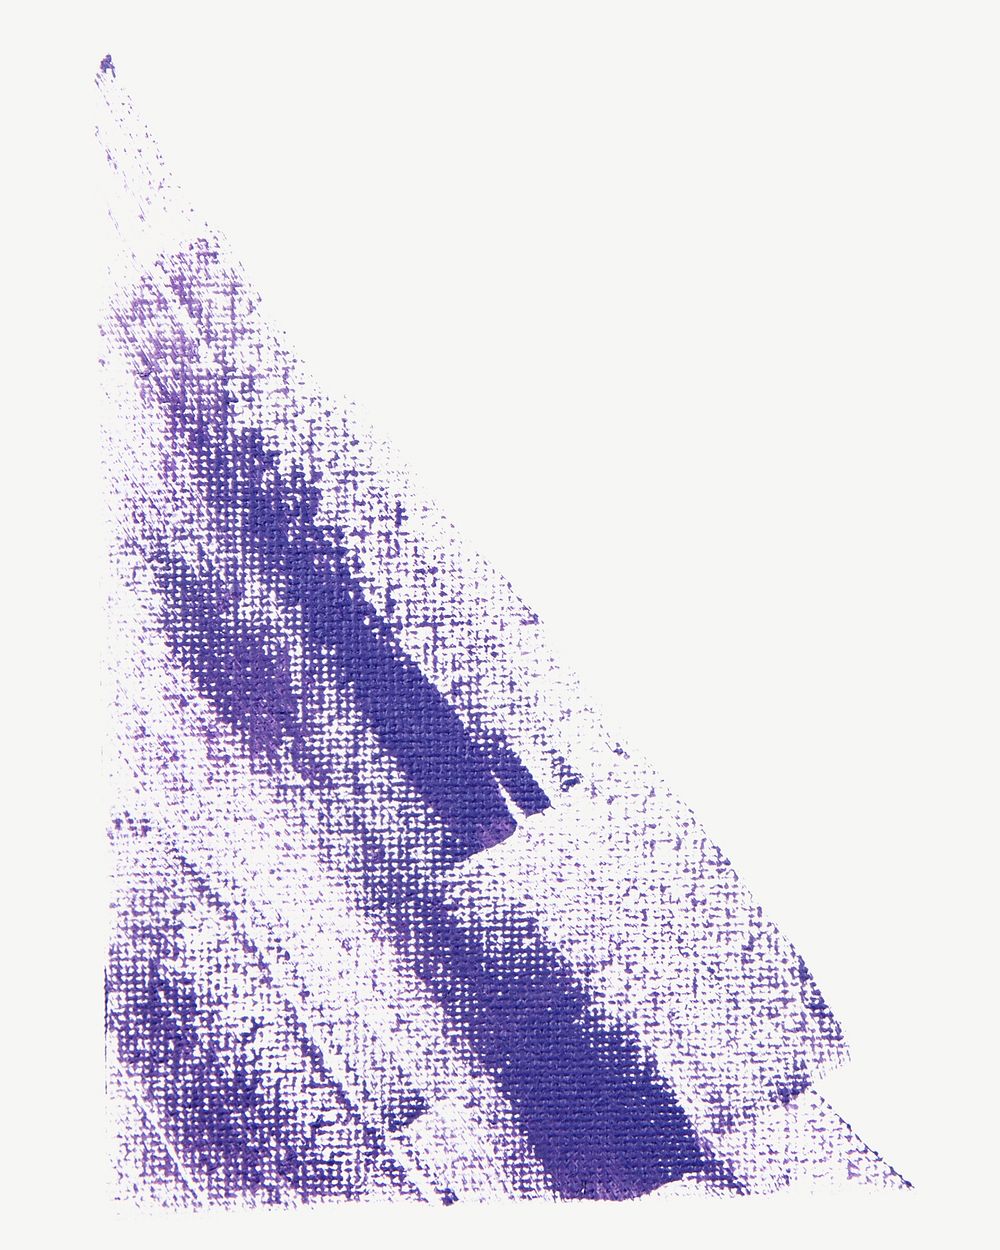 Purple brush stroke collage element psd